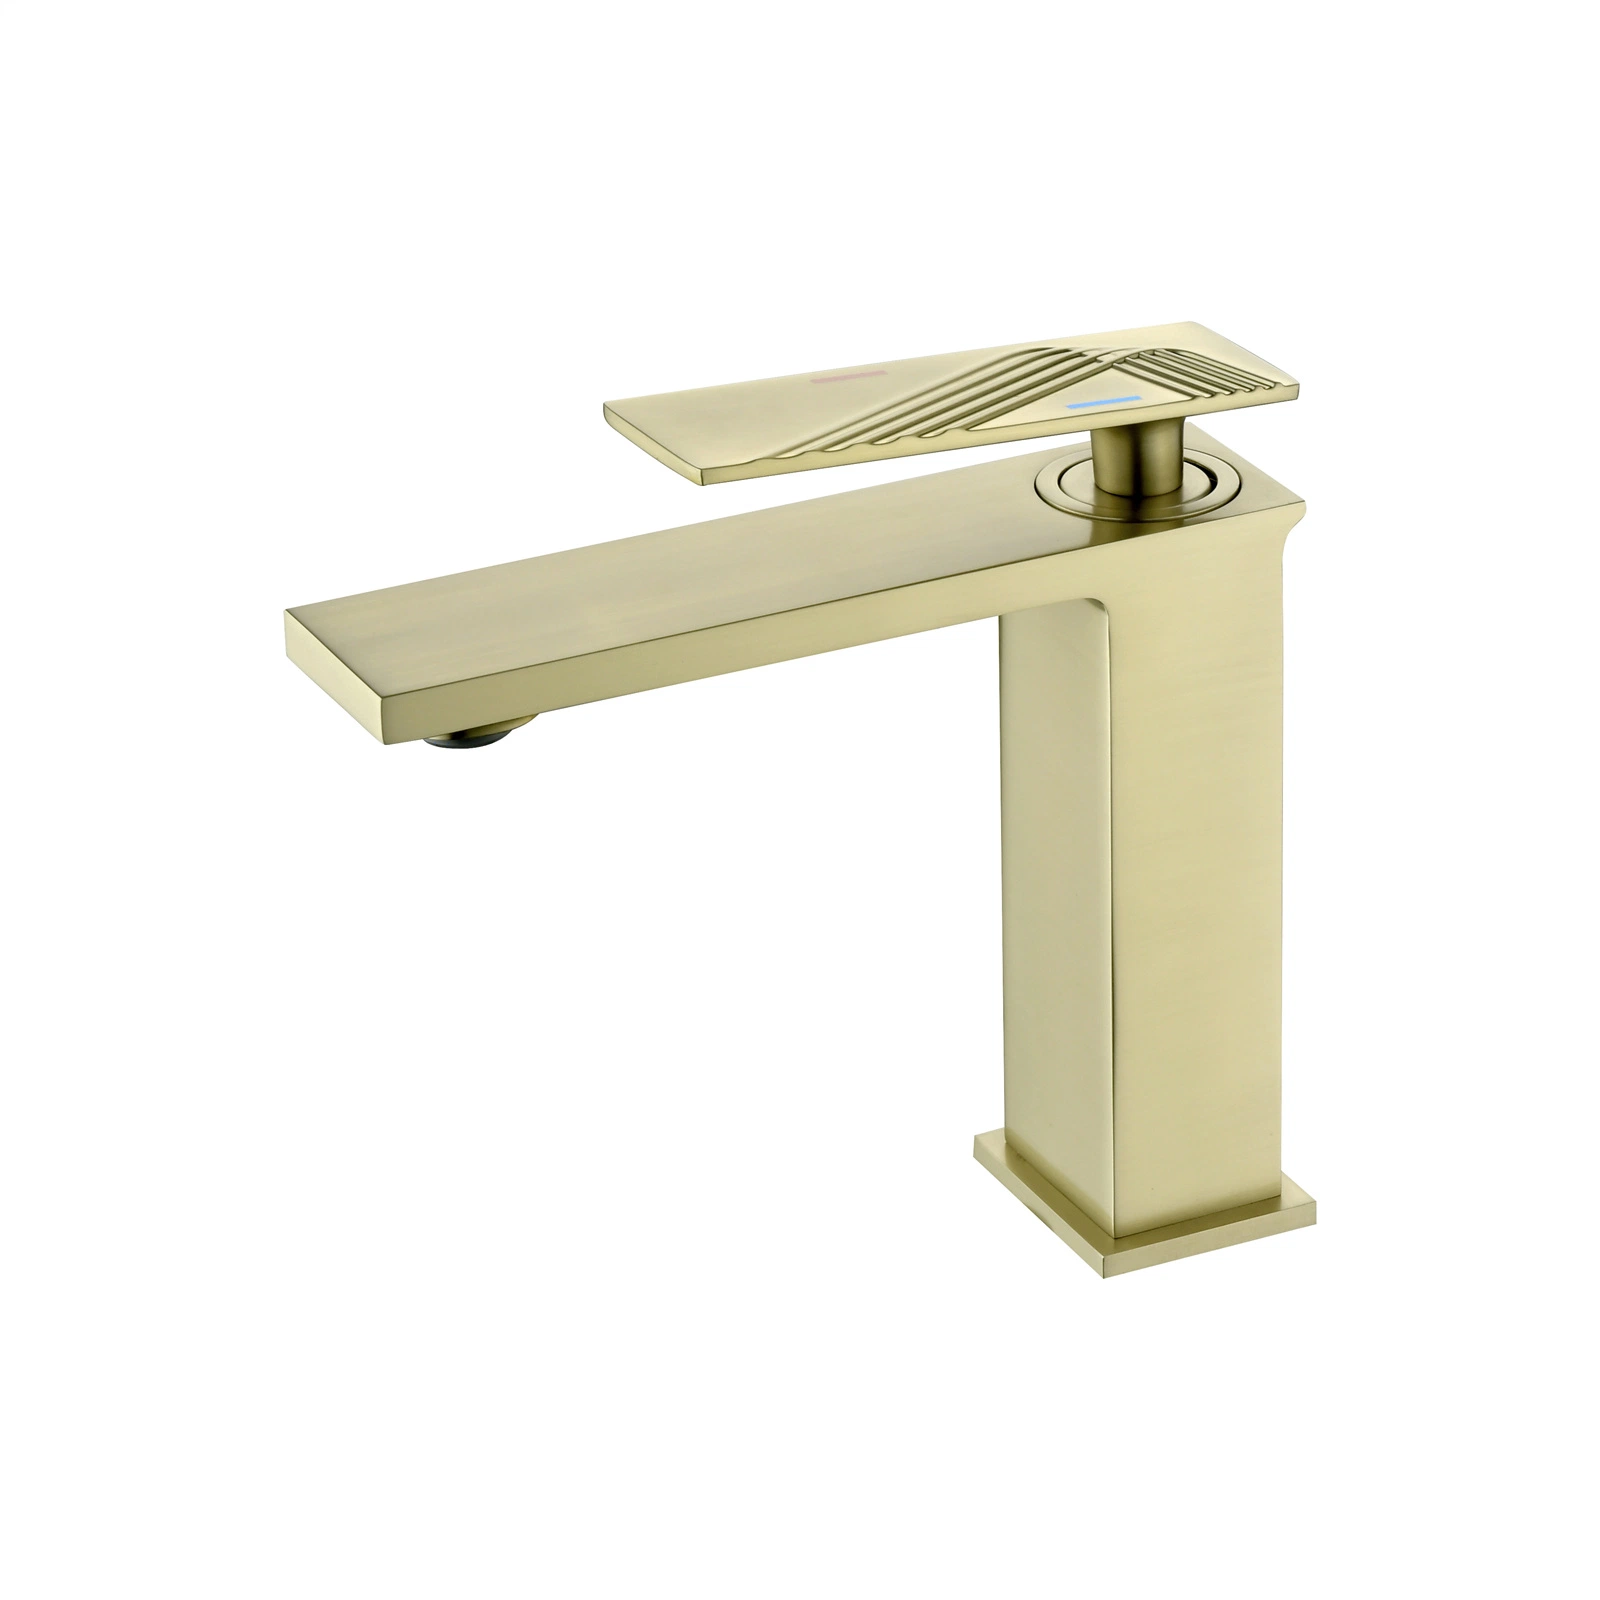 Fashion New Design Styles Luxury Brused Nickel Golden Bathroom Basin Sink Taps Faucet Mixer